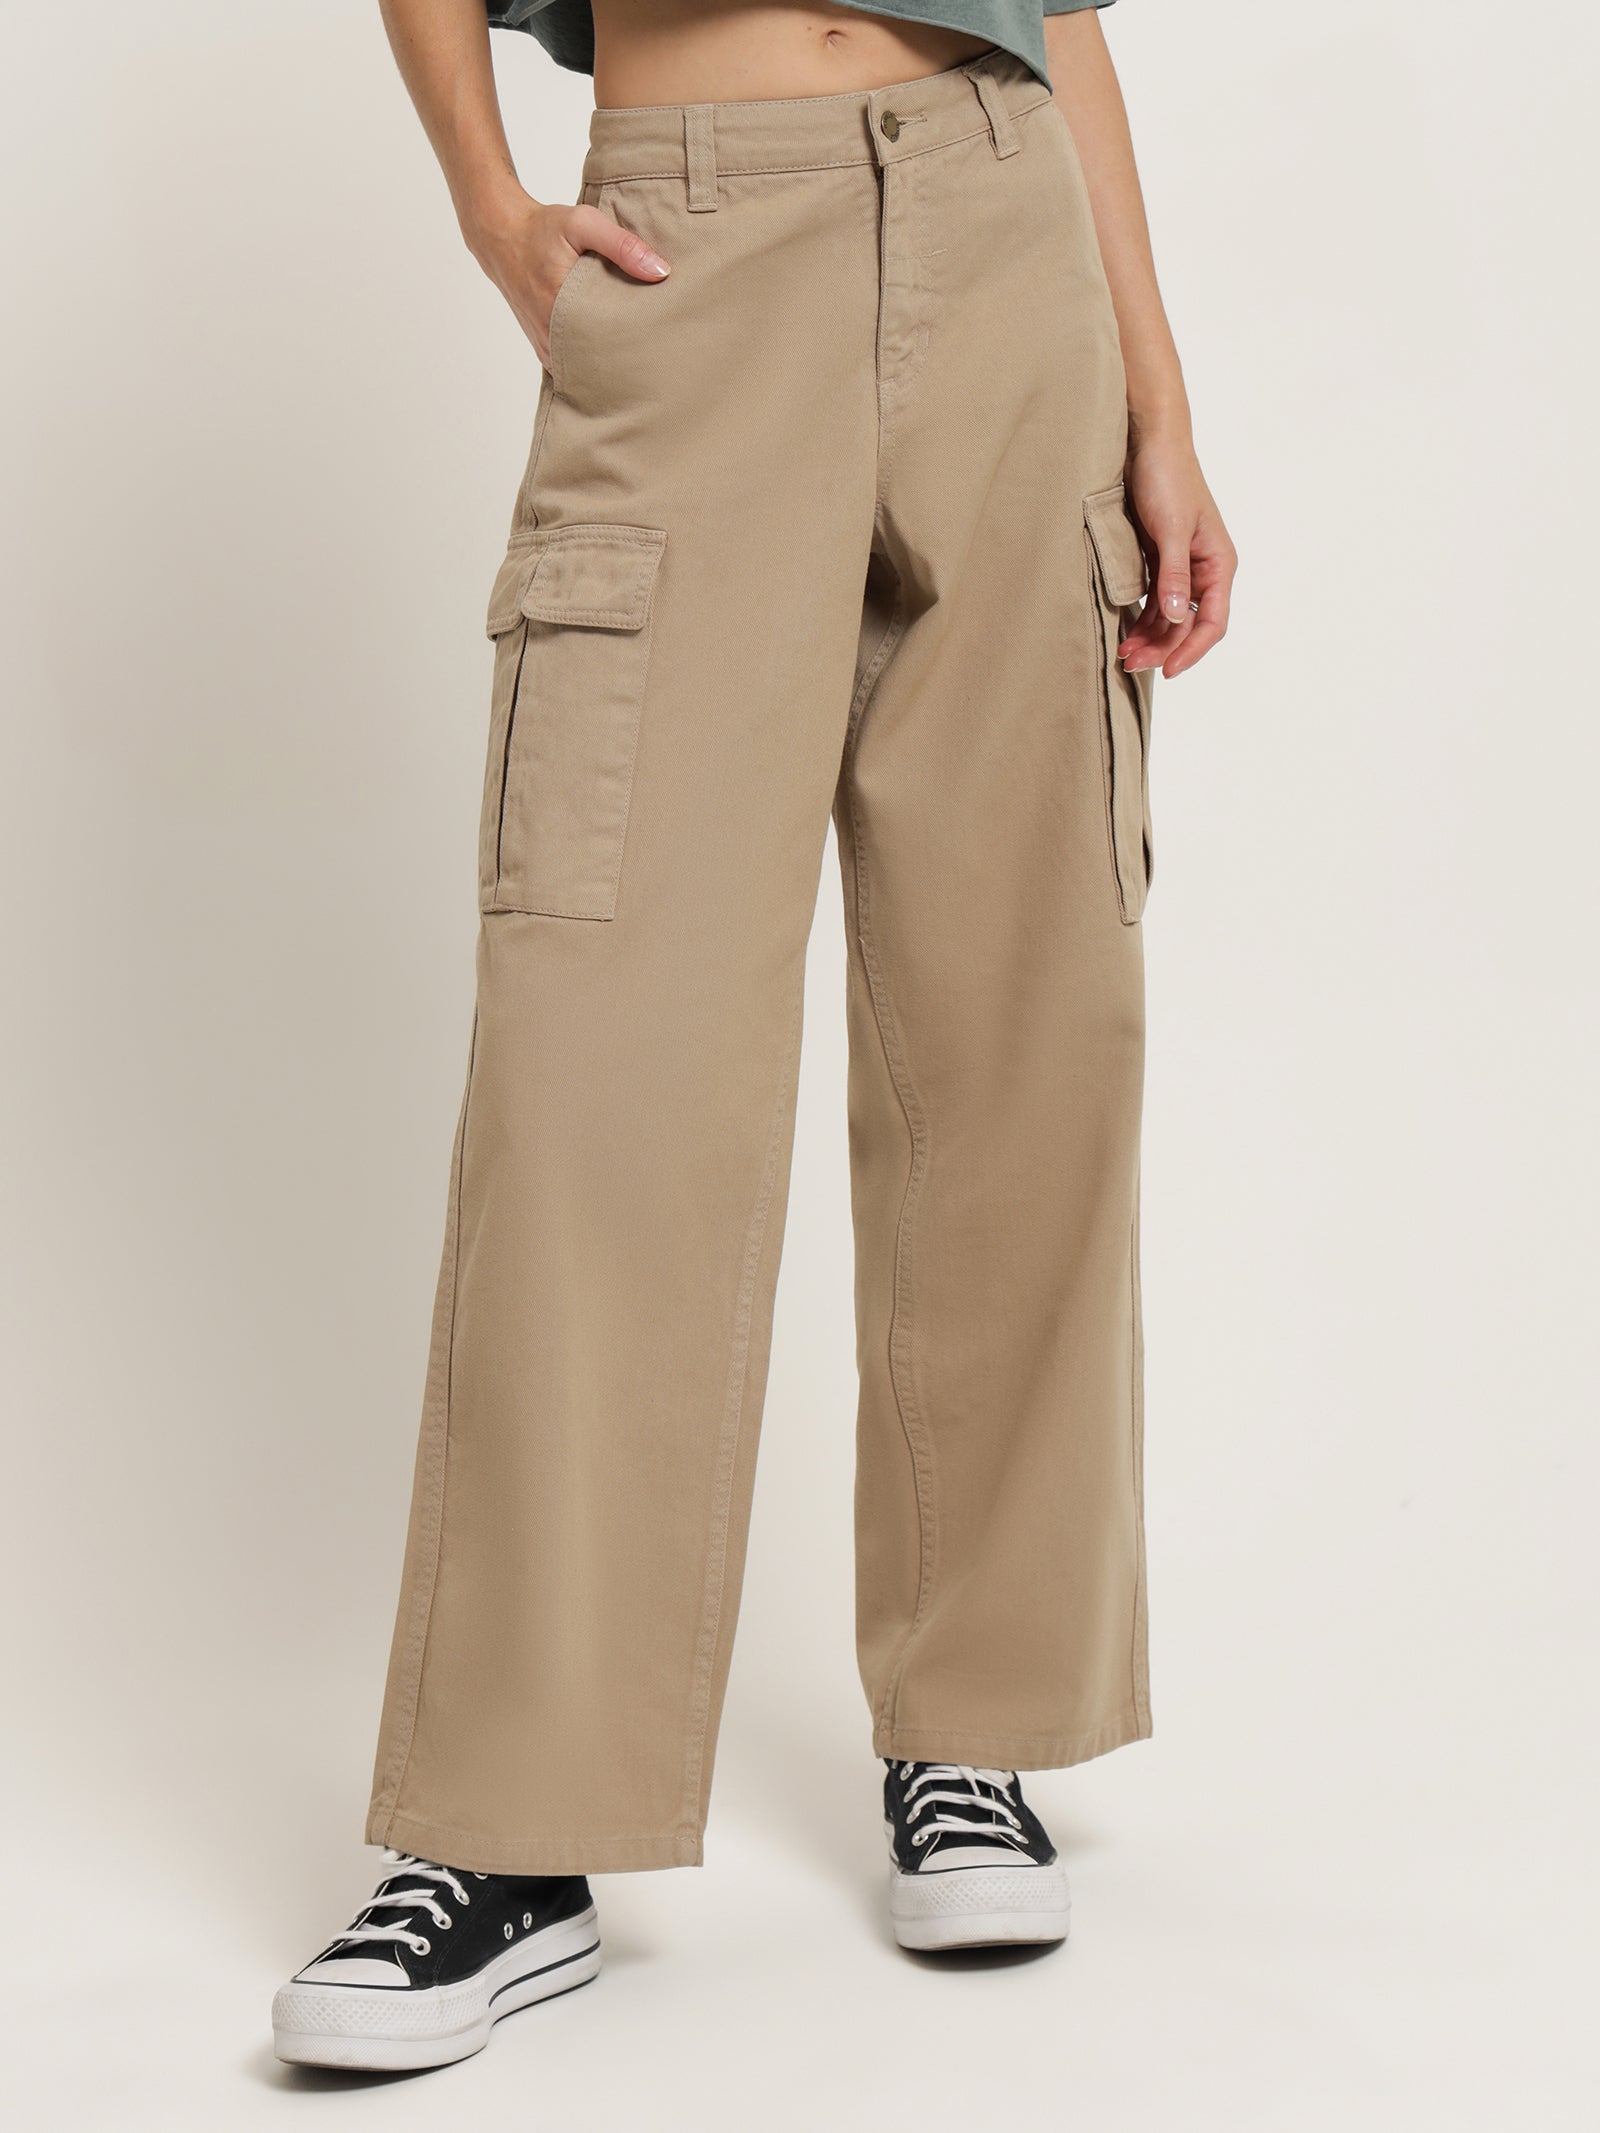 Merona Women's Target Size 8 Stretch Modern Khaki Dress Pants, Pockets  | eBay